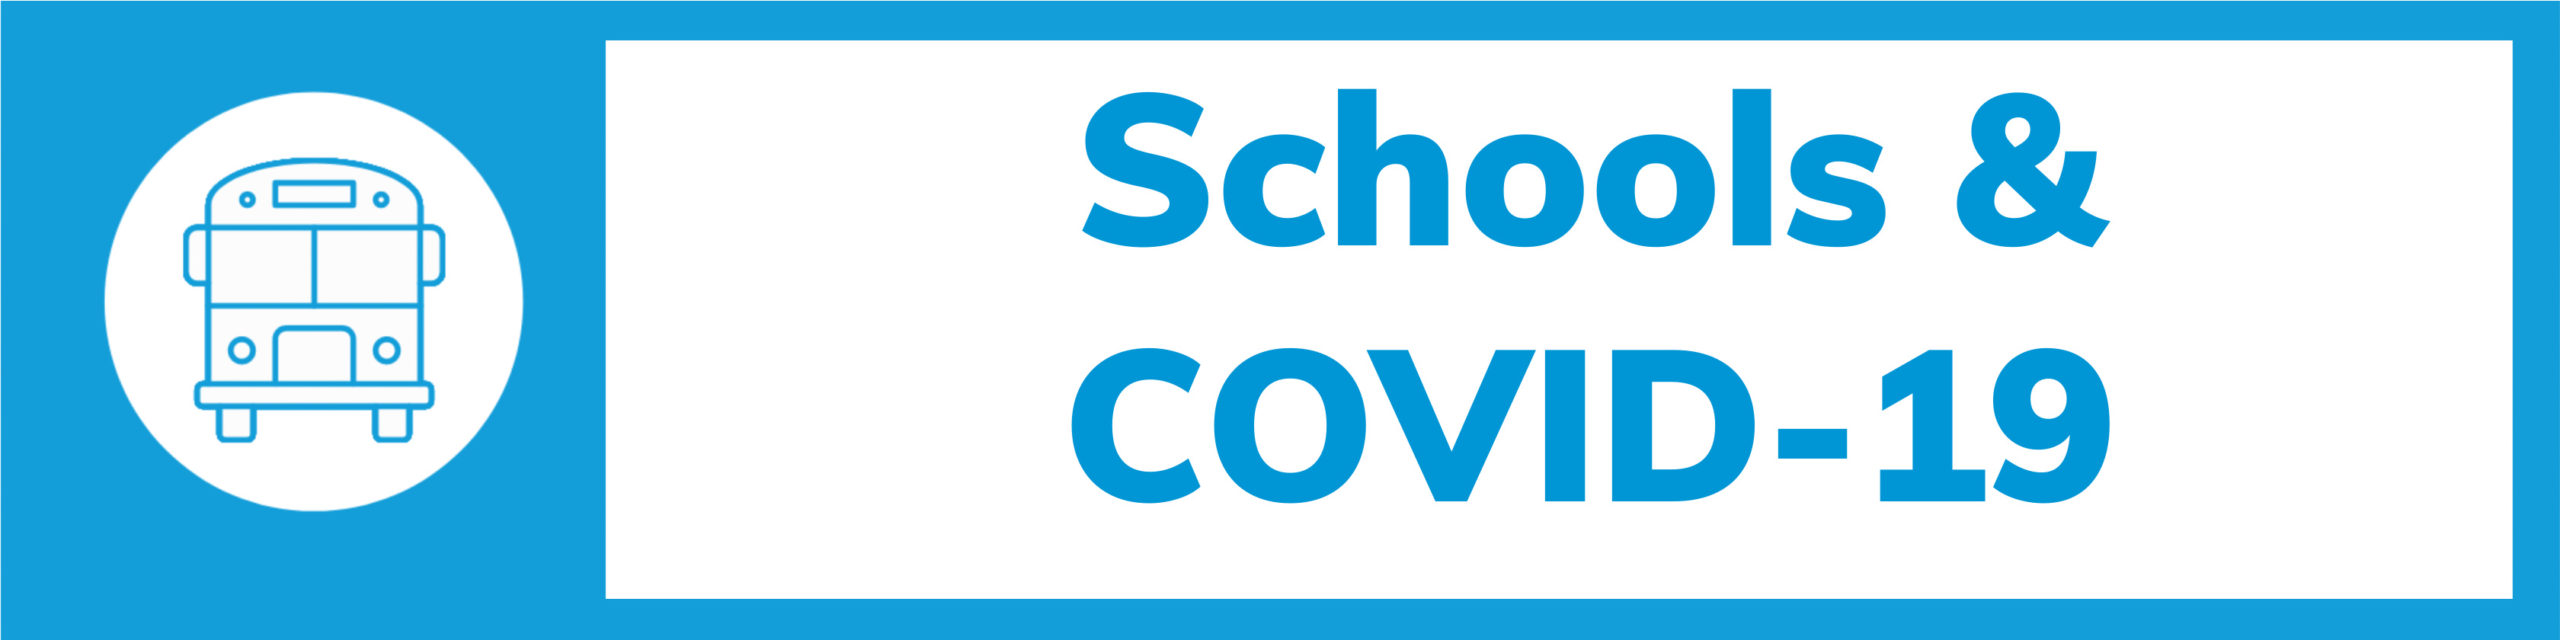 schools and covid-19